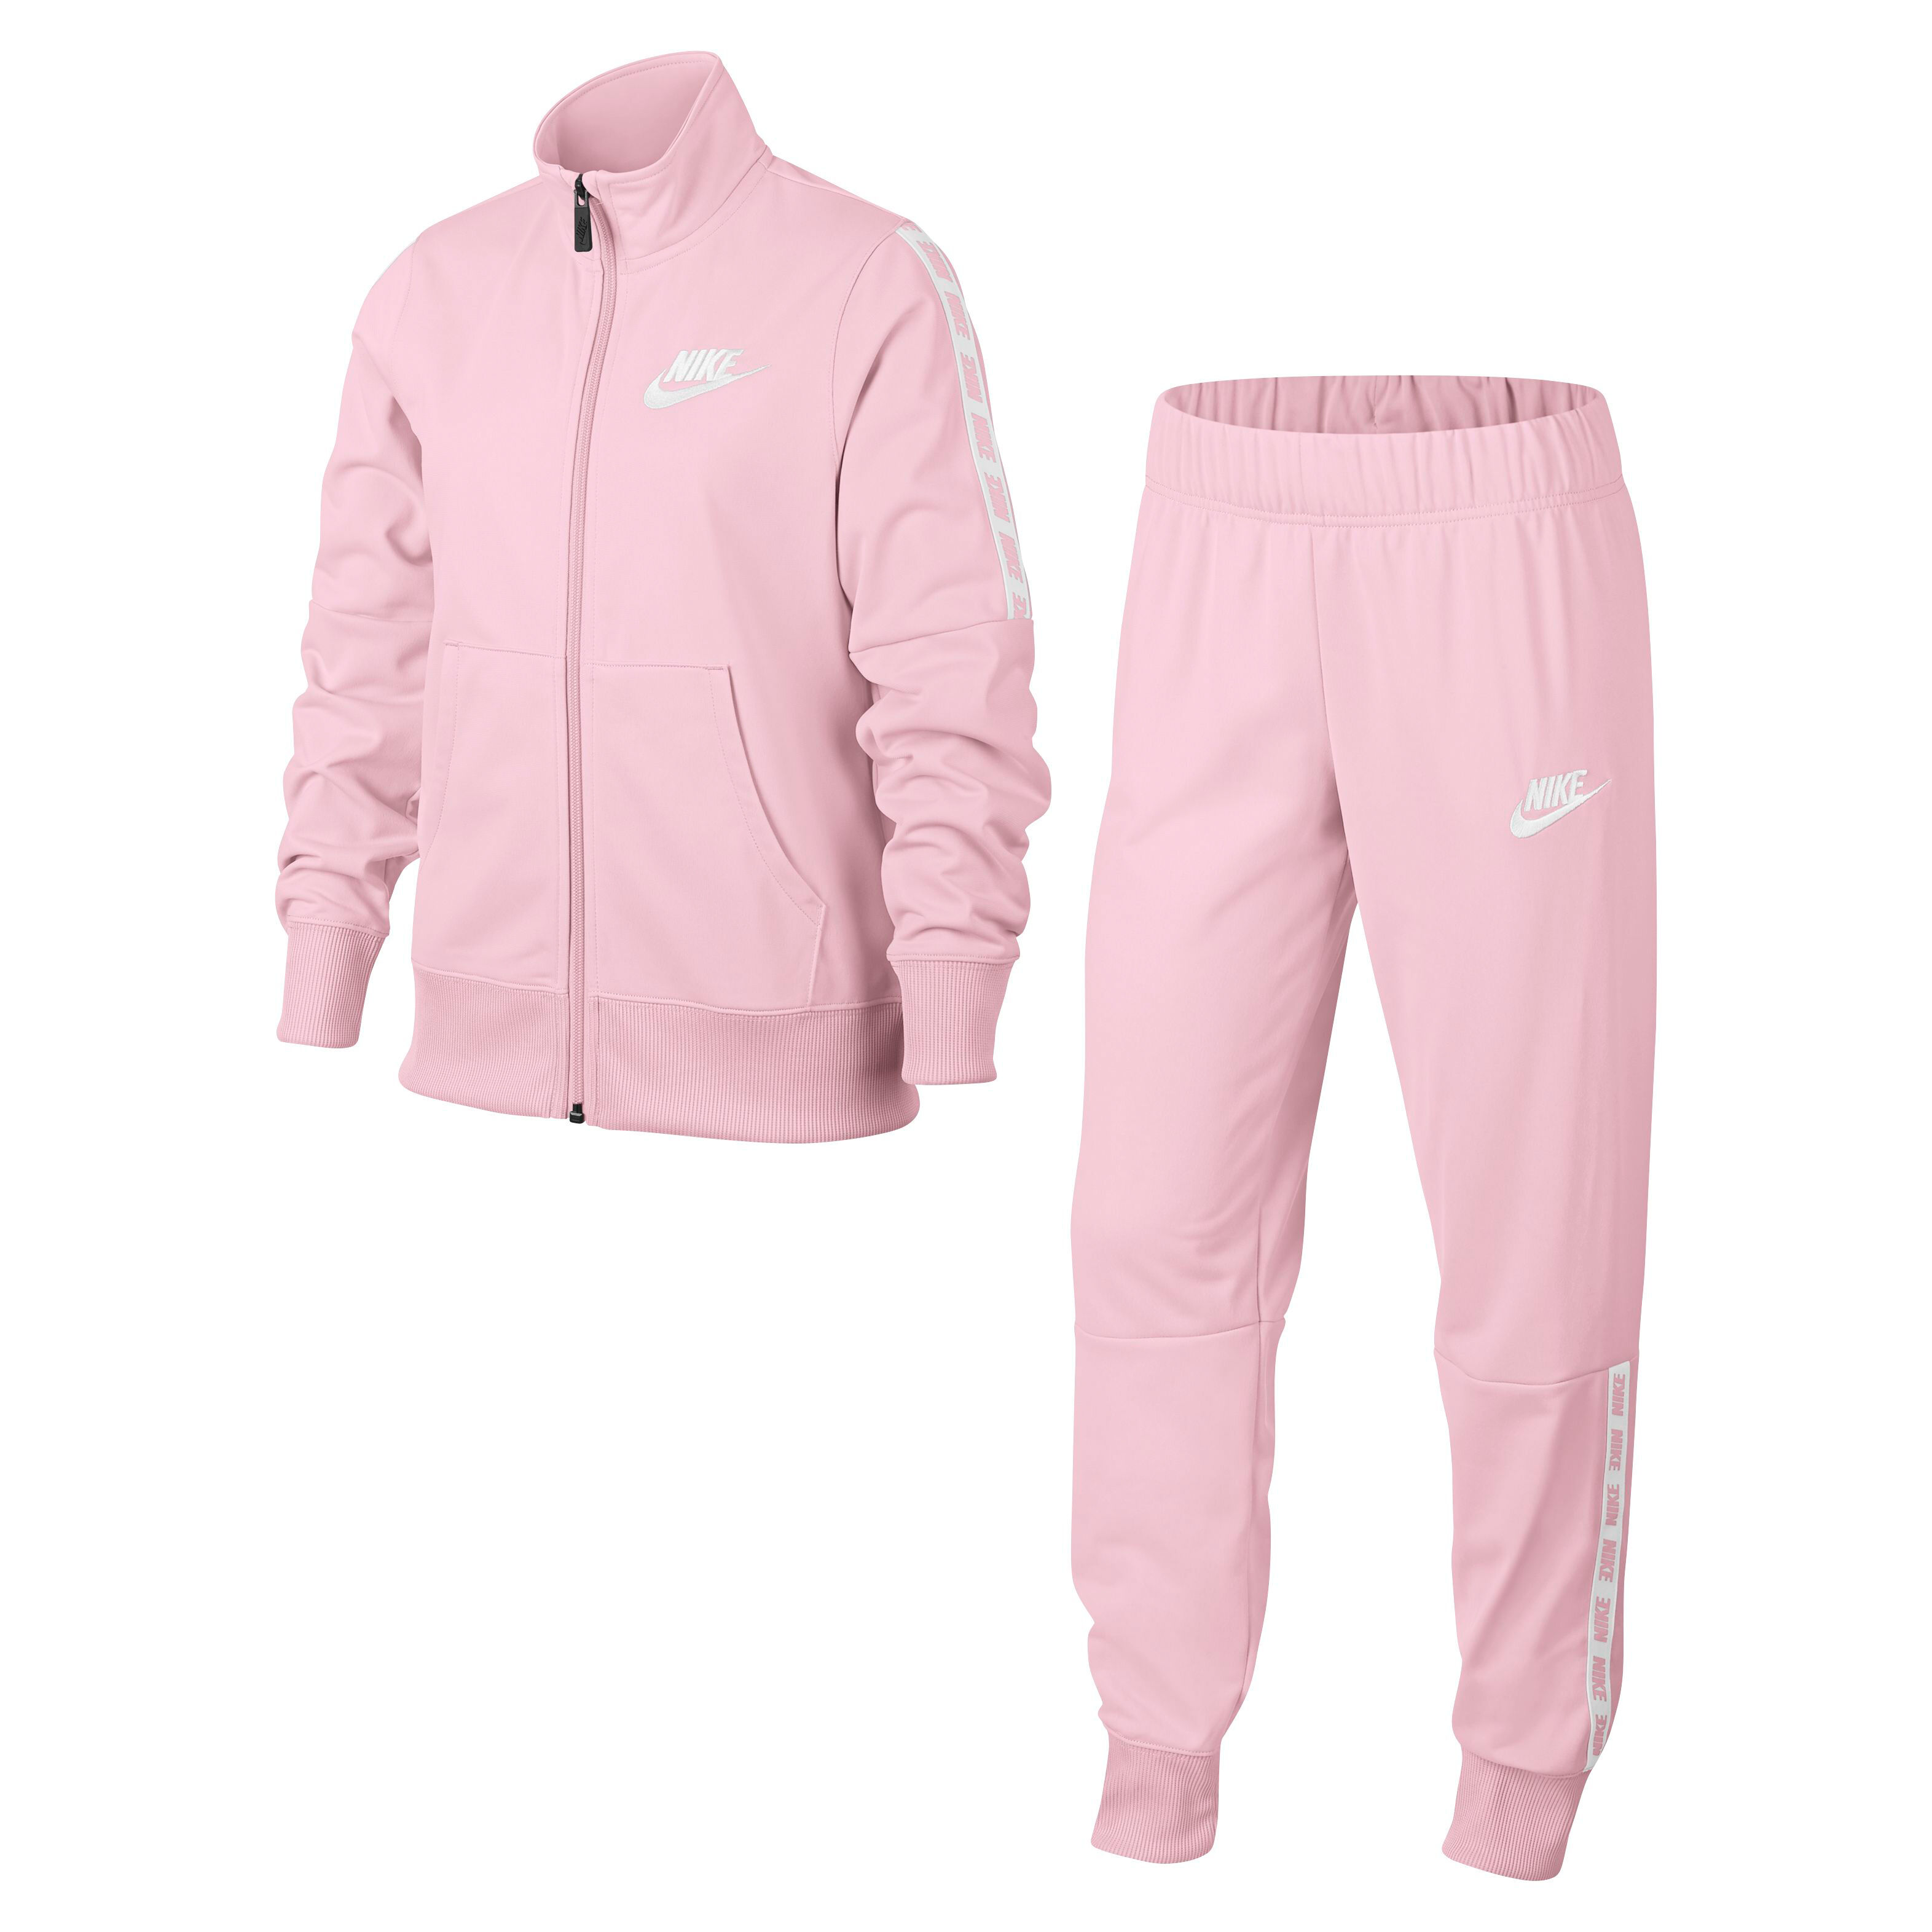 nike joggers women pink